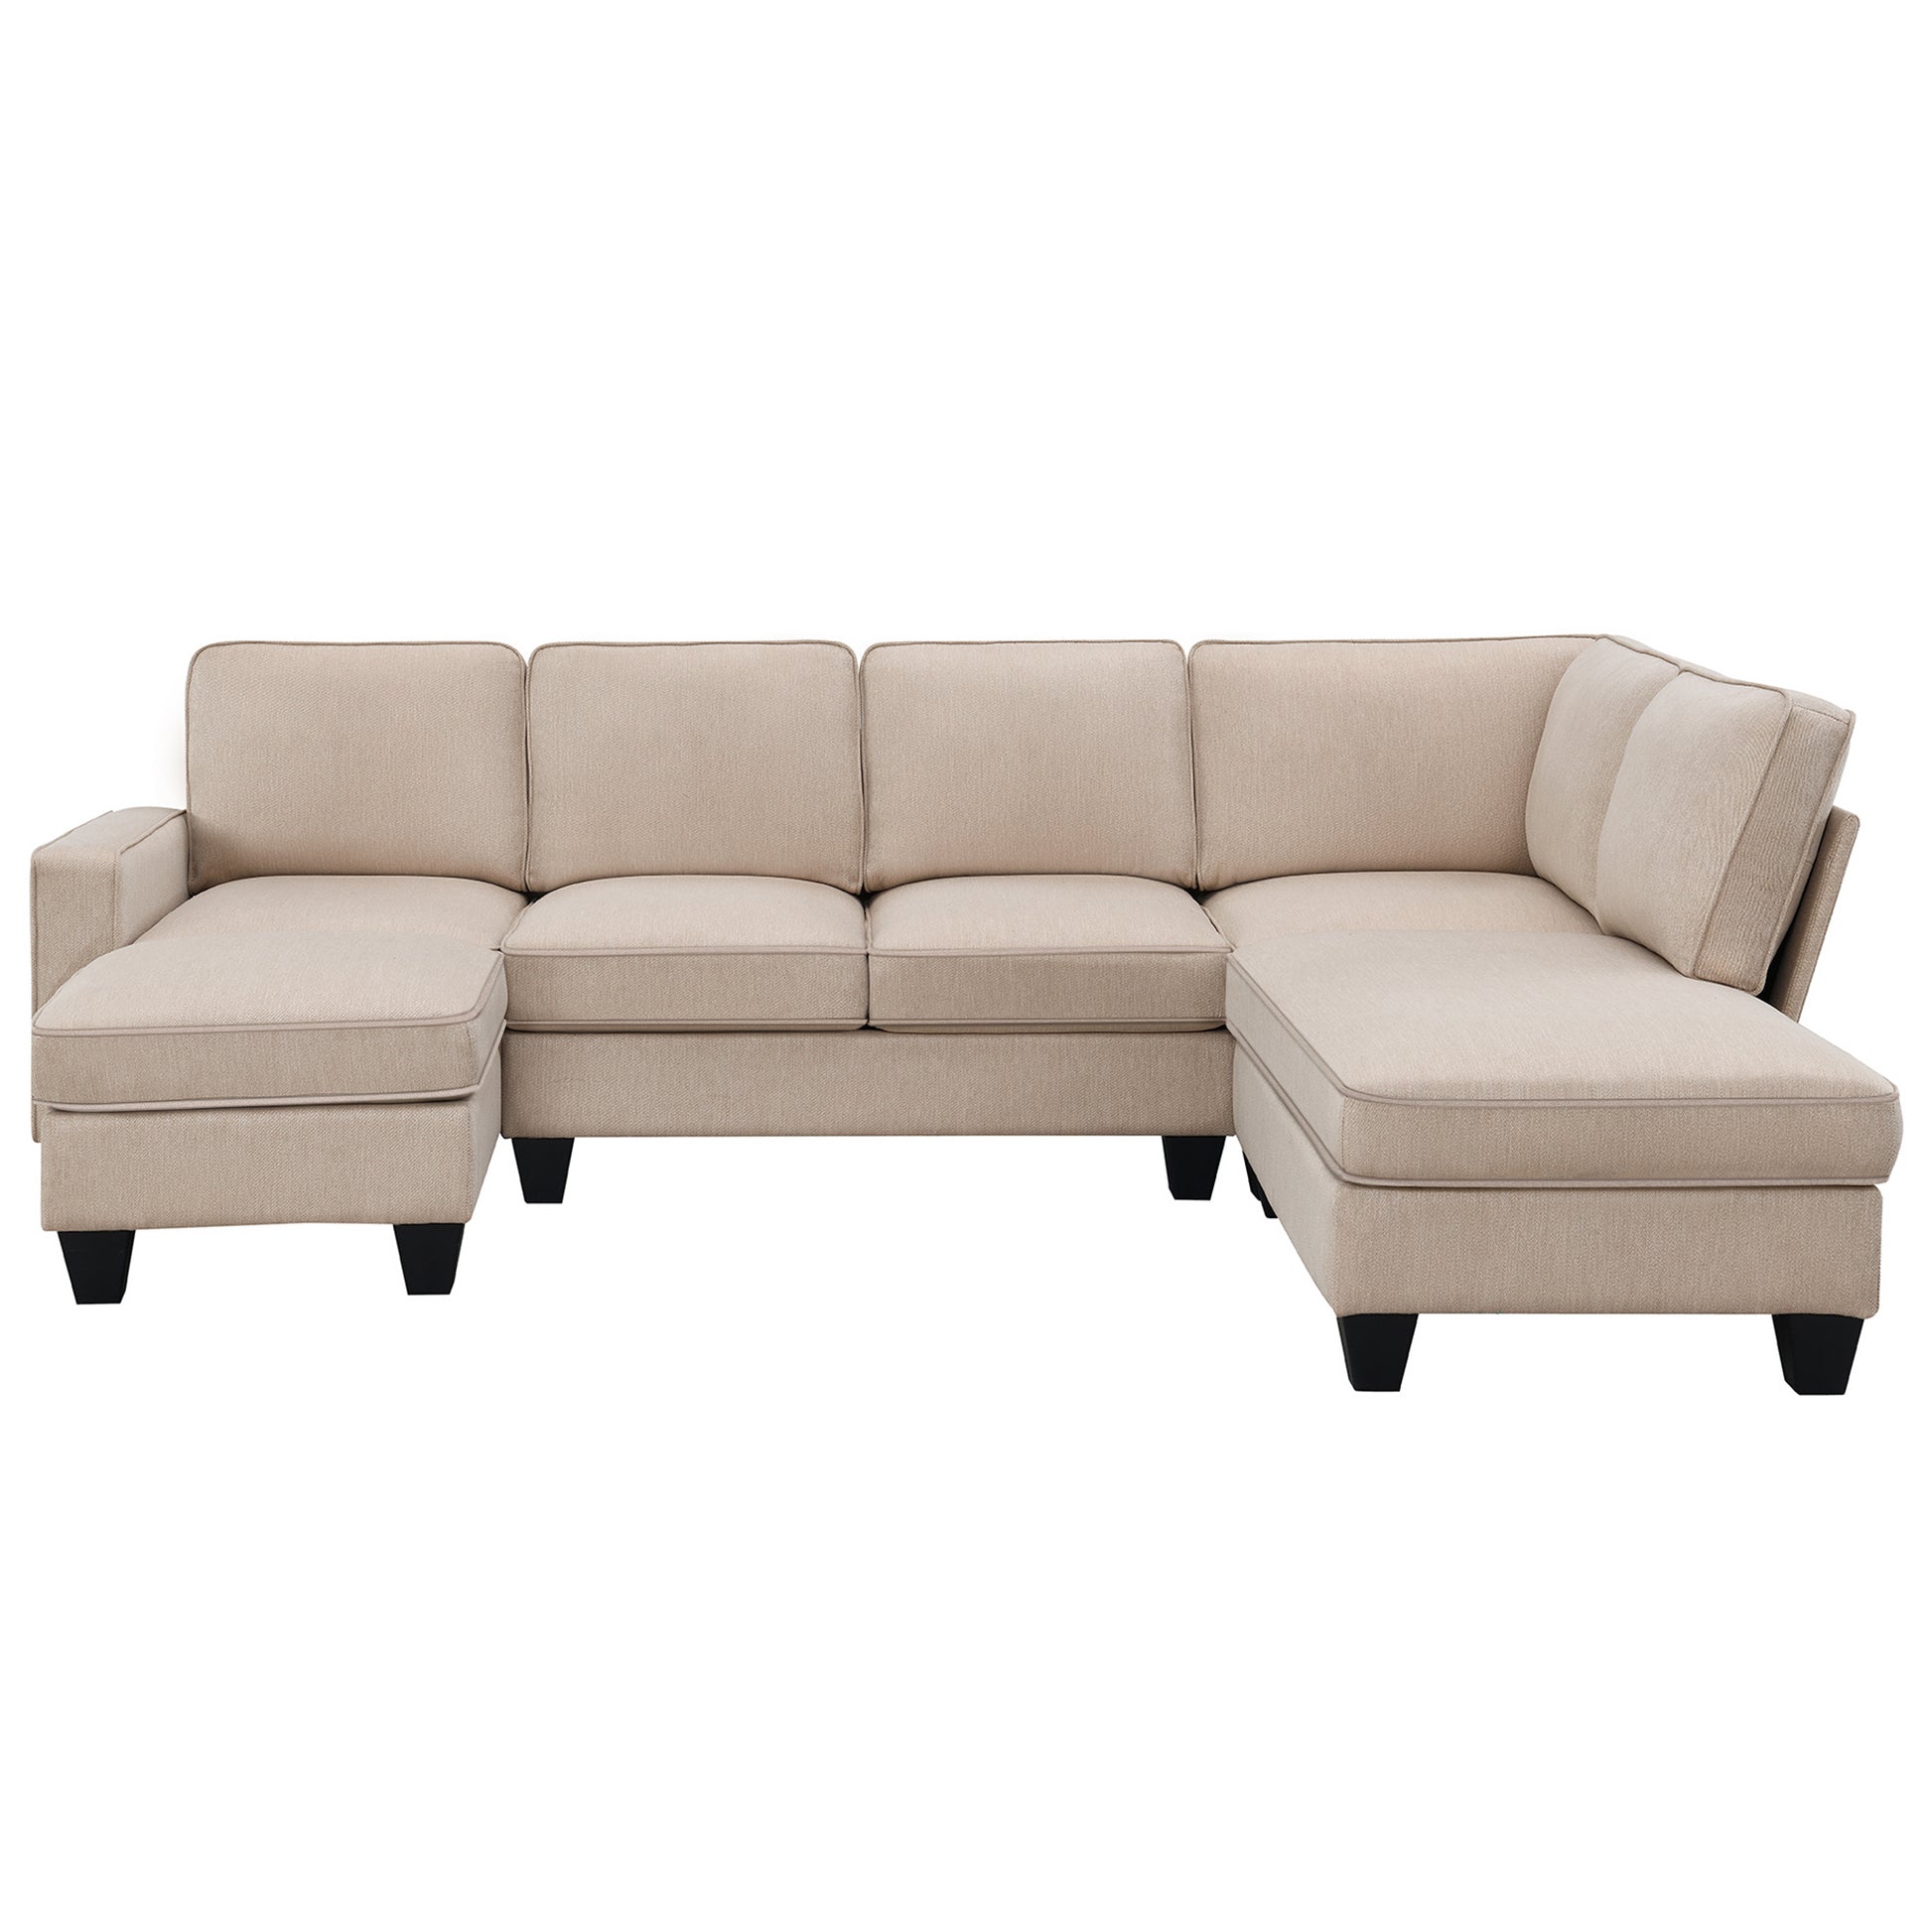 Sectional Sofa: 7-Seat Set, Chaise Lounge, Convertible Ottoman